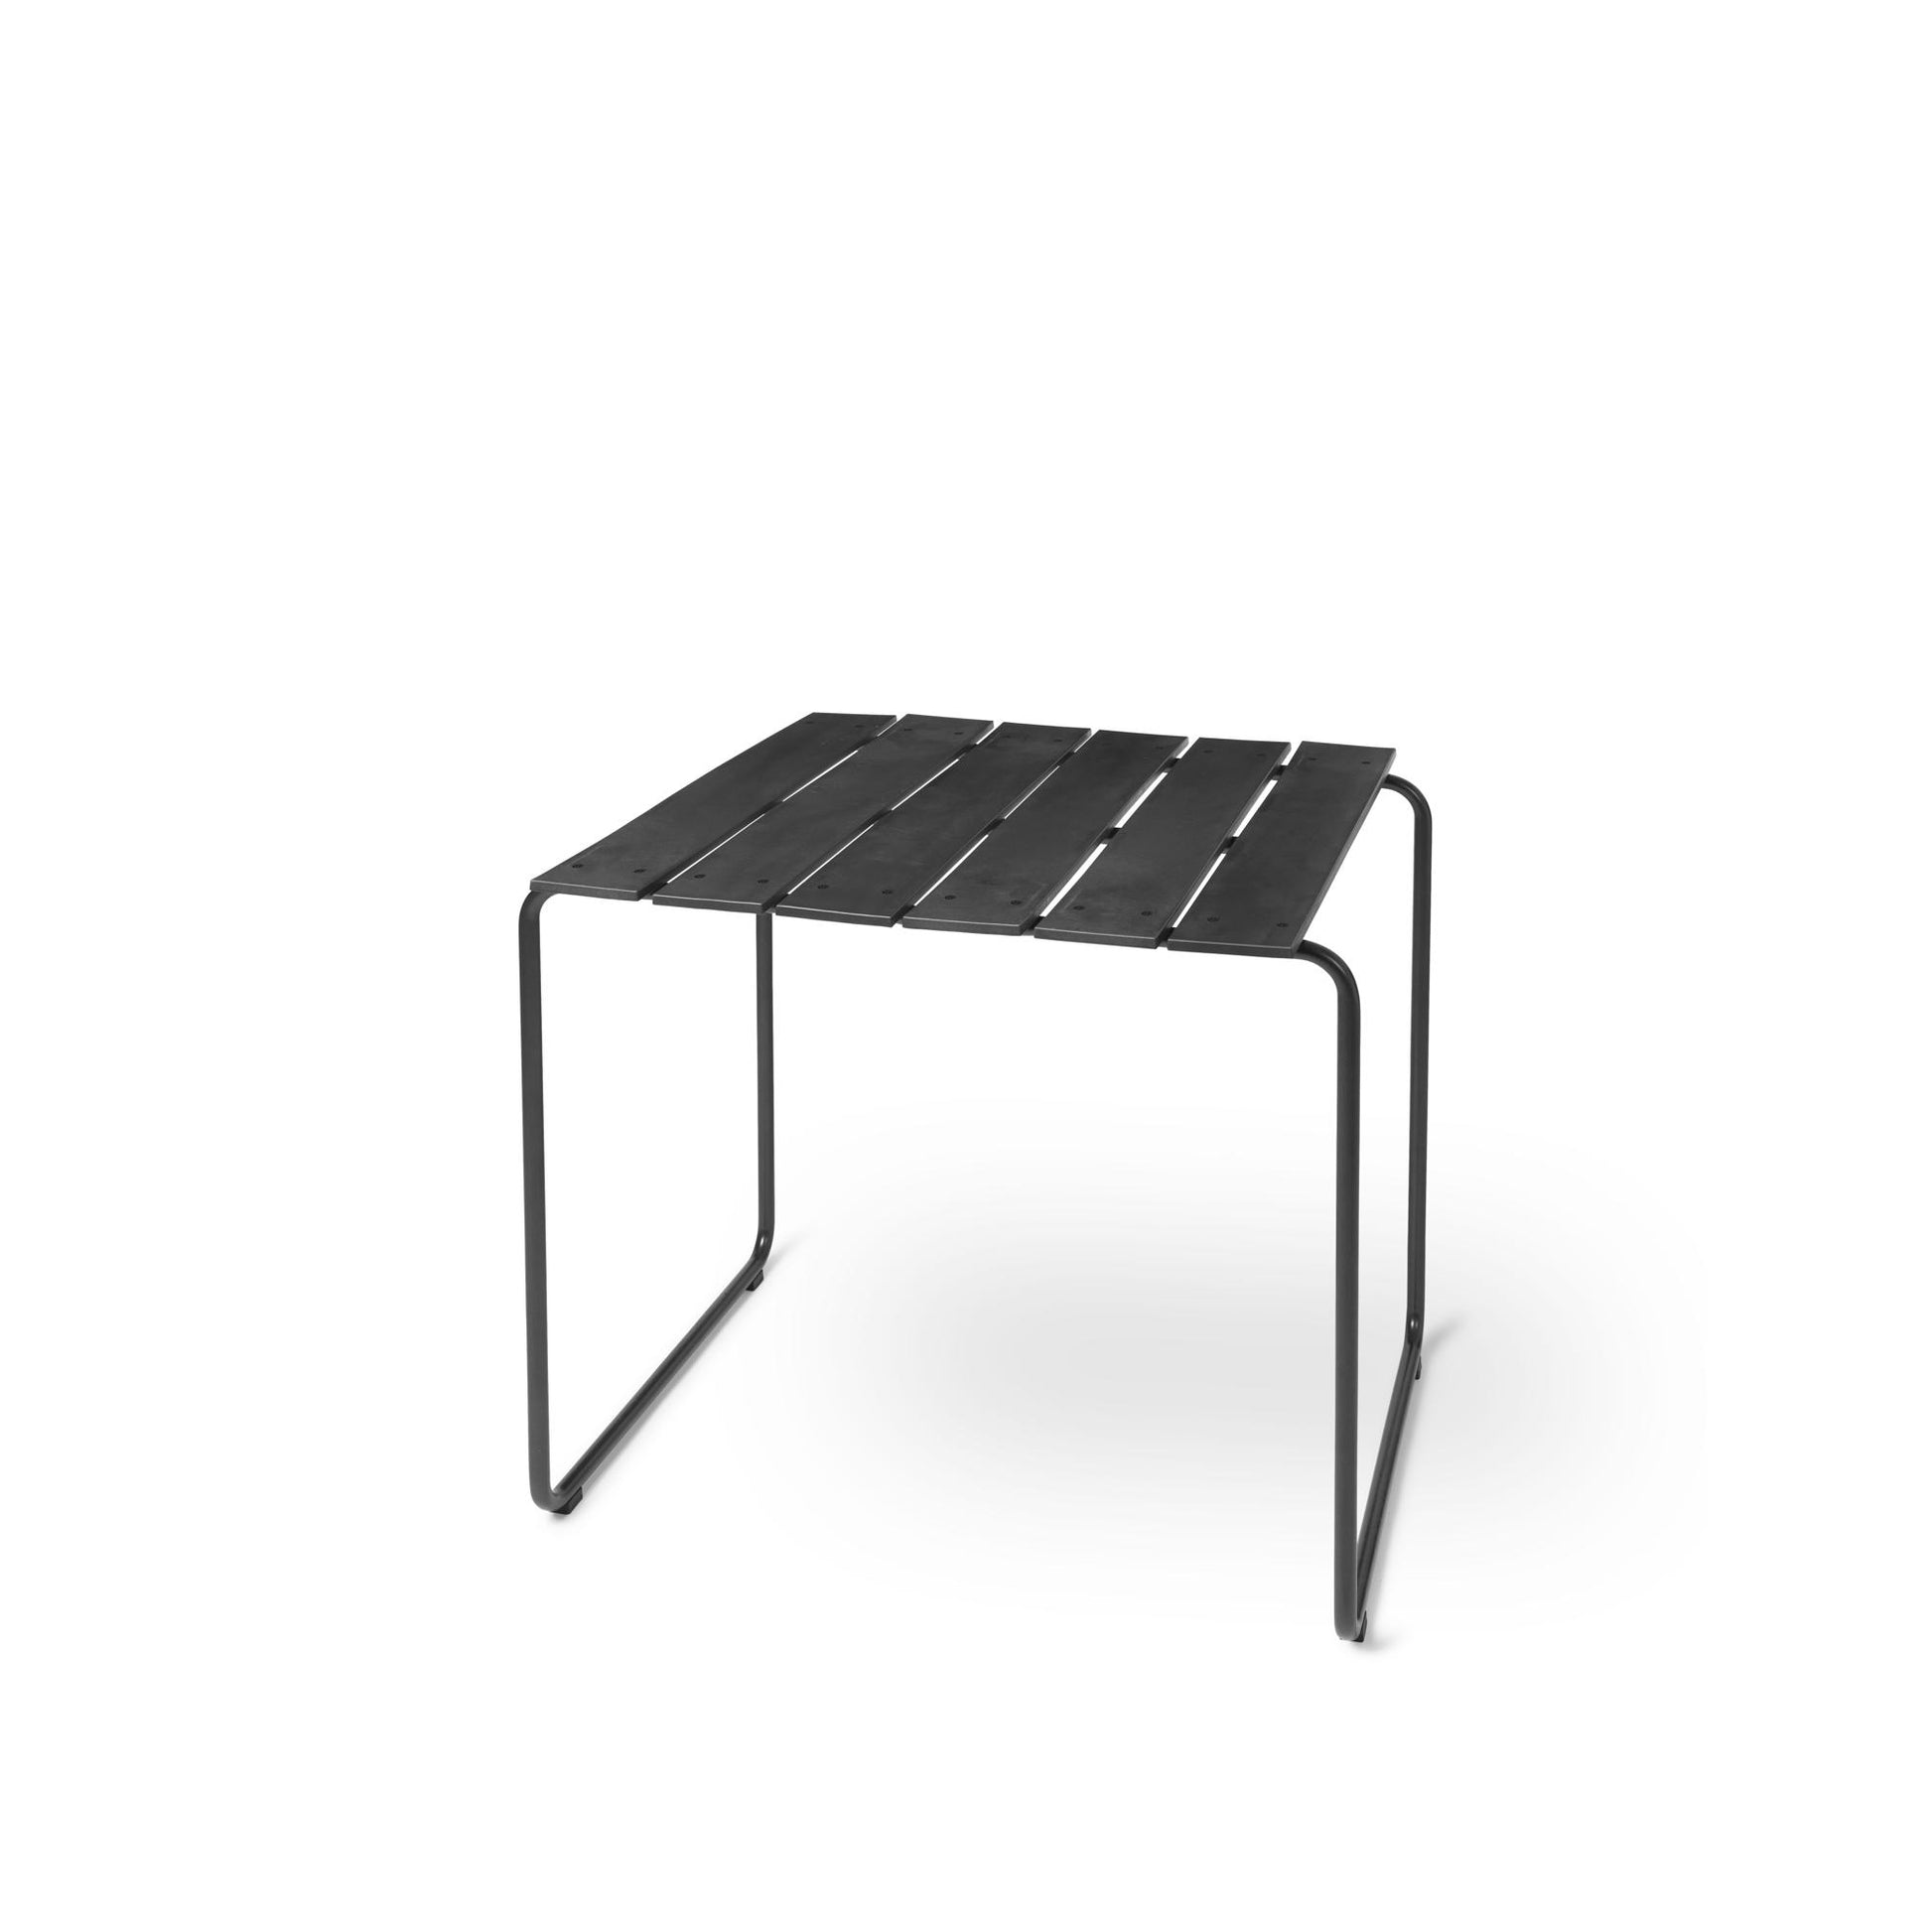 Ocean OC2 Table 70x70 cm by Mater #Black